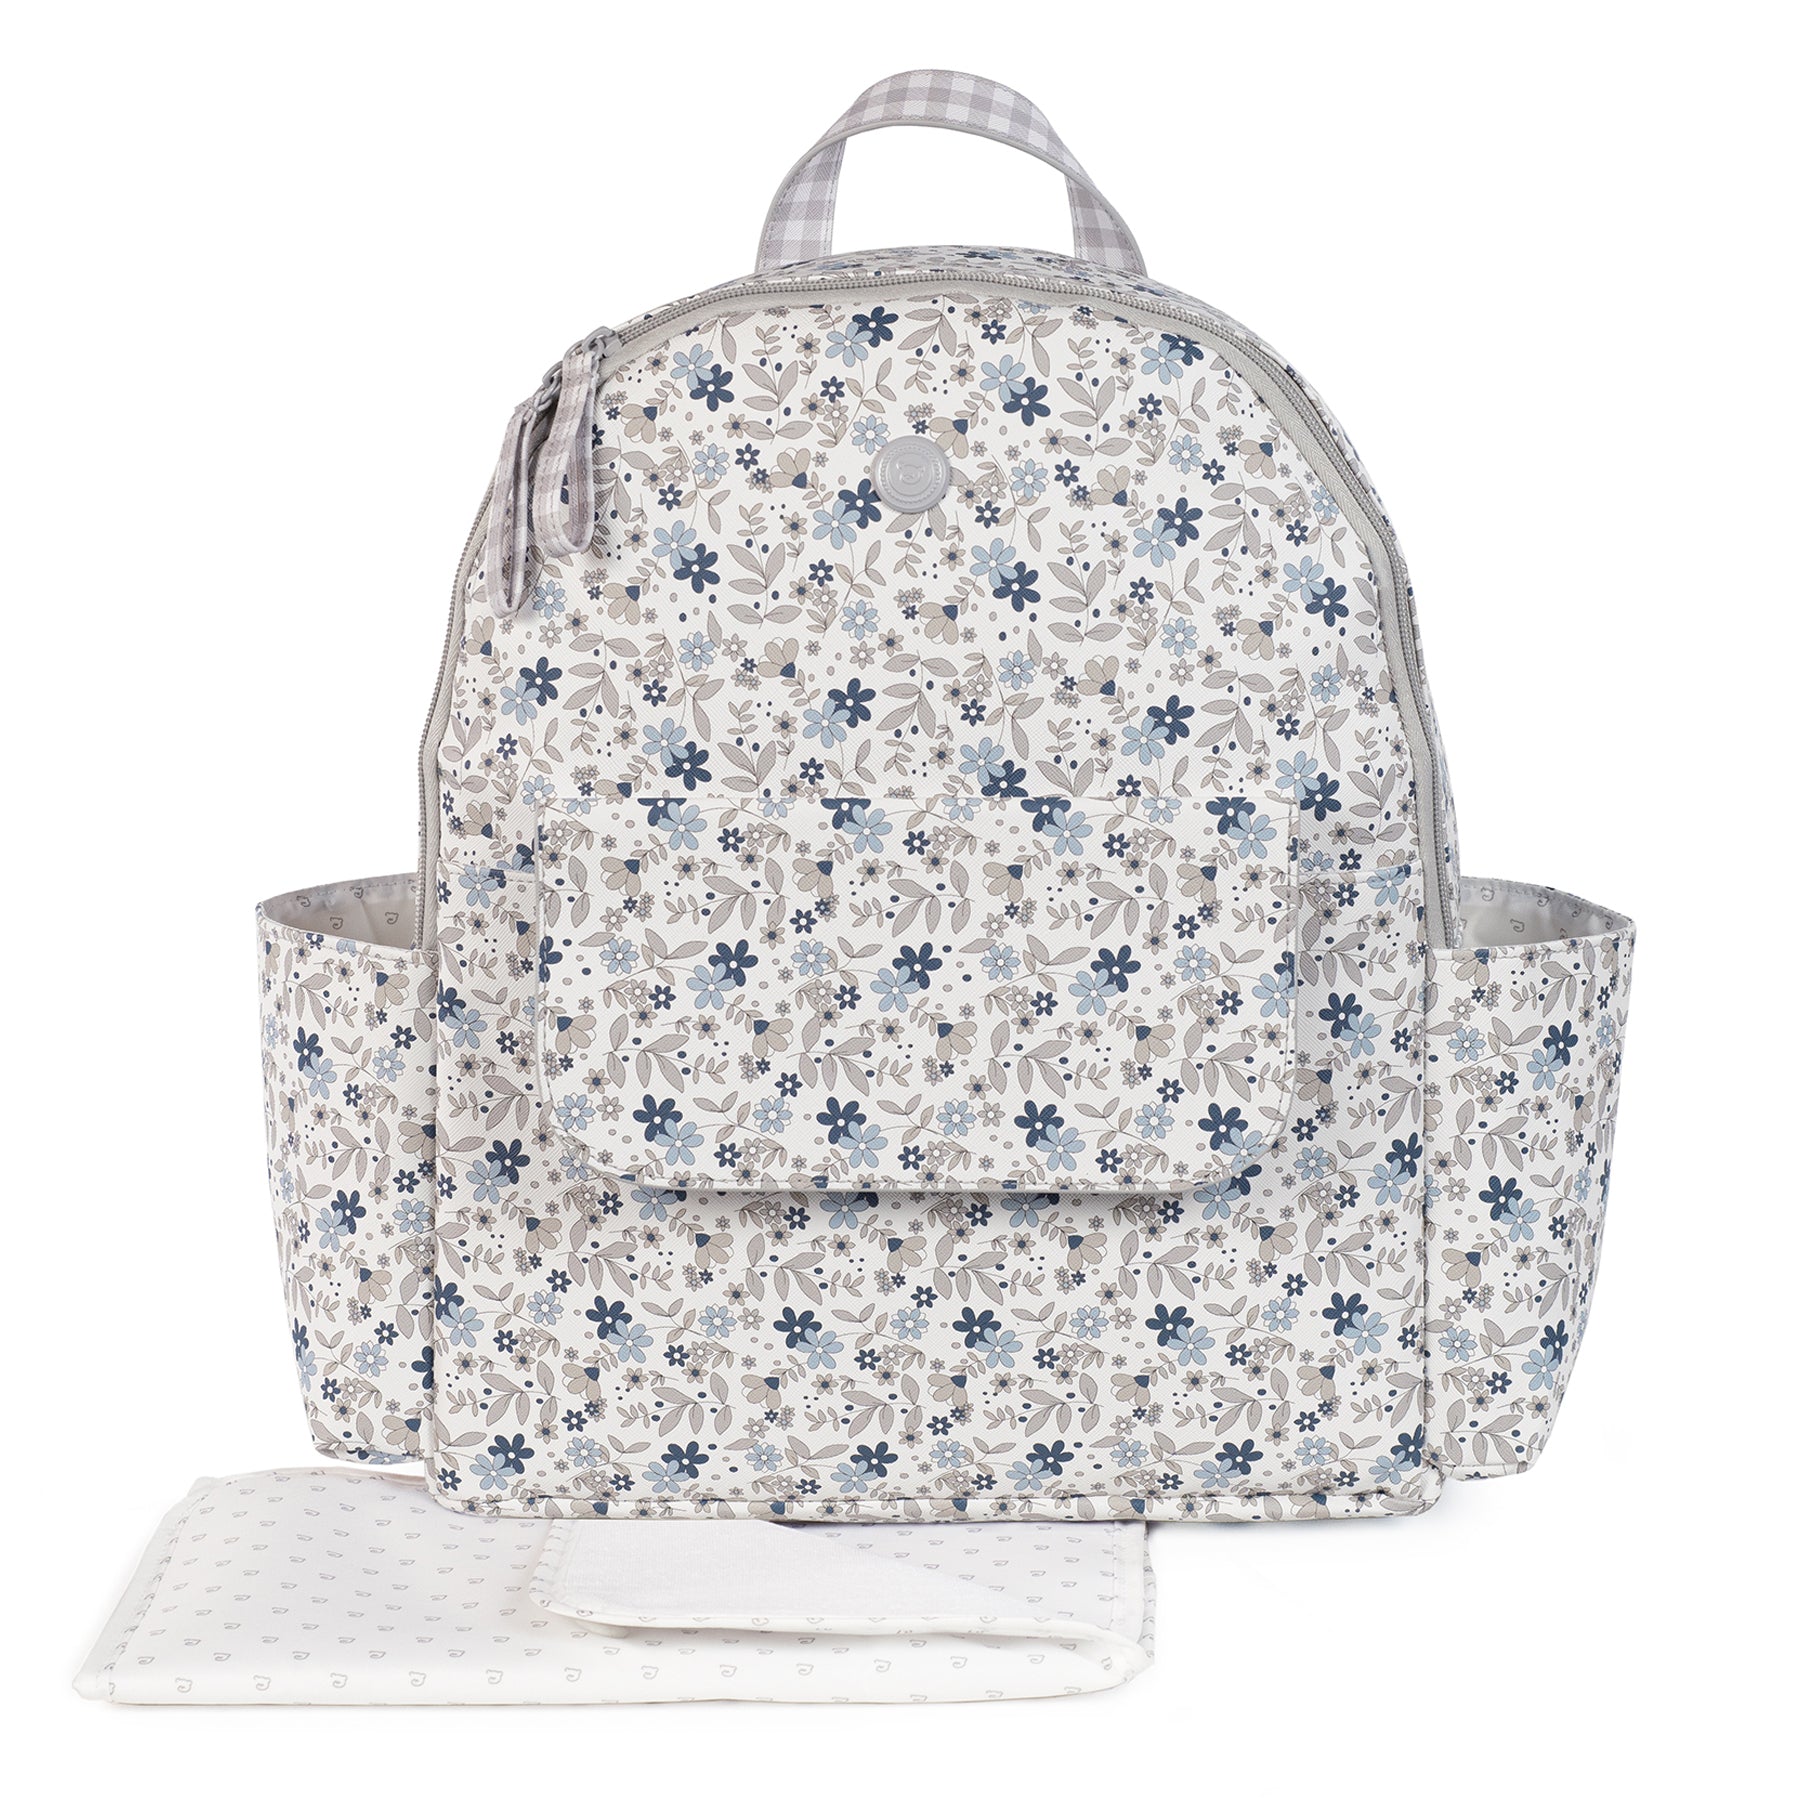 Pasito a Pasito Delia Blue Backpack Diaper Changing Bag